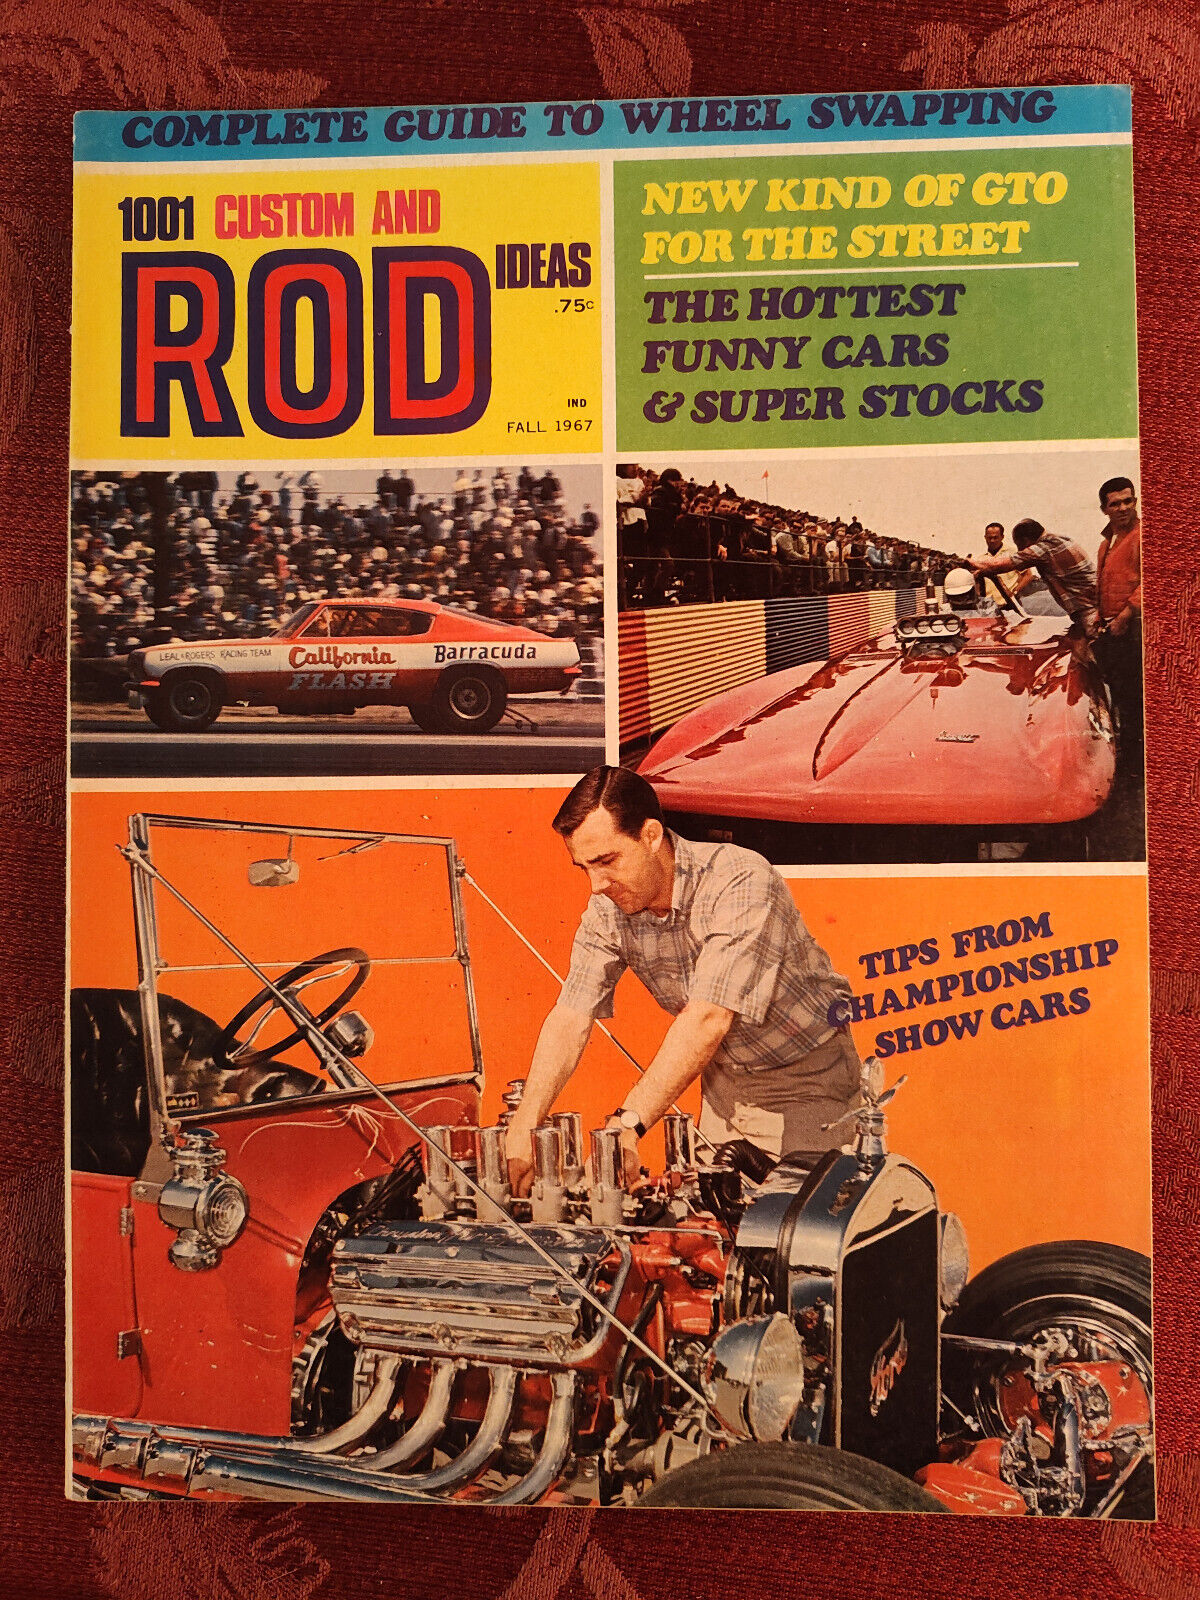 1001 Custom and ROD ideas Fall 1967 Championship Show Cars GTO Funny Cars